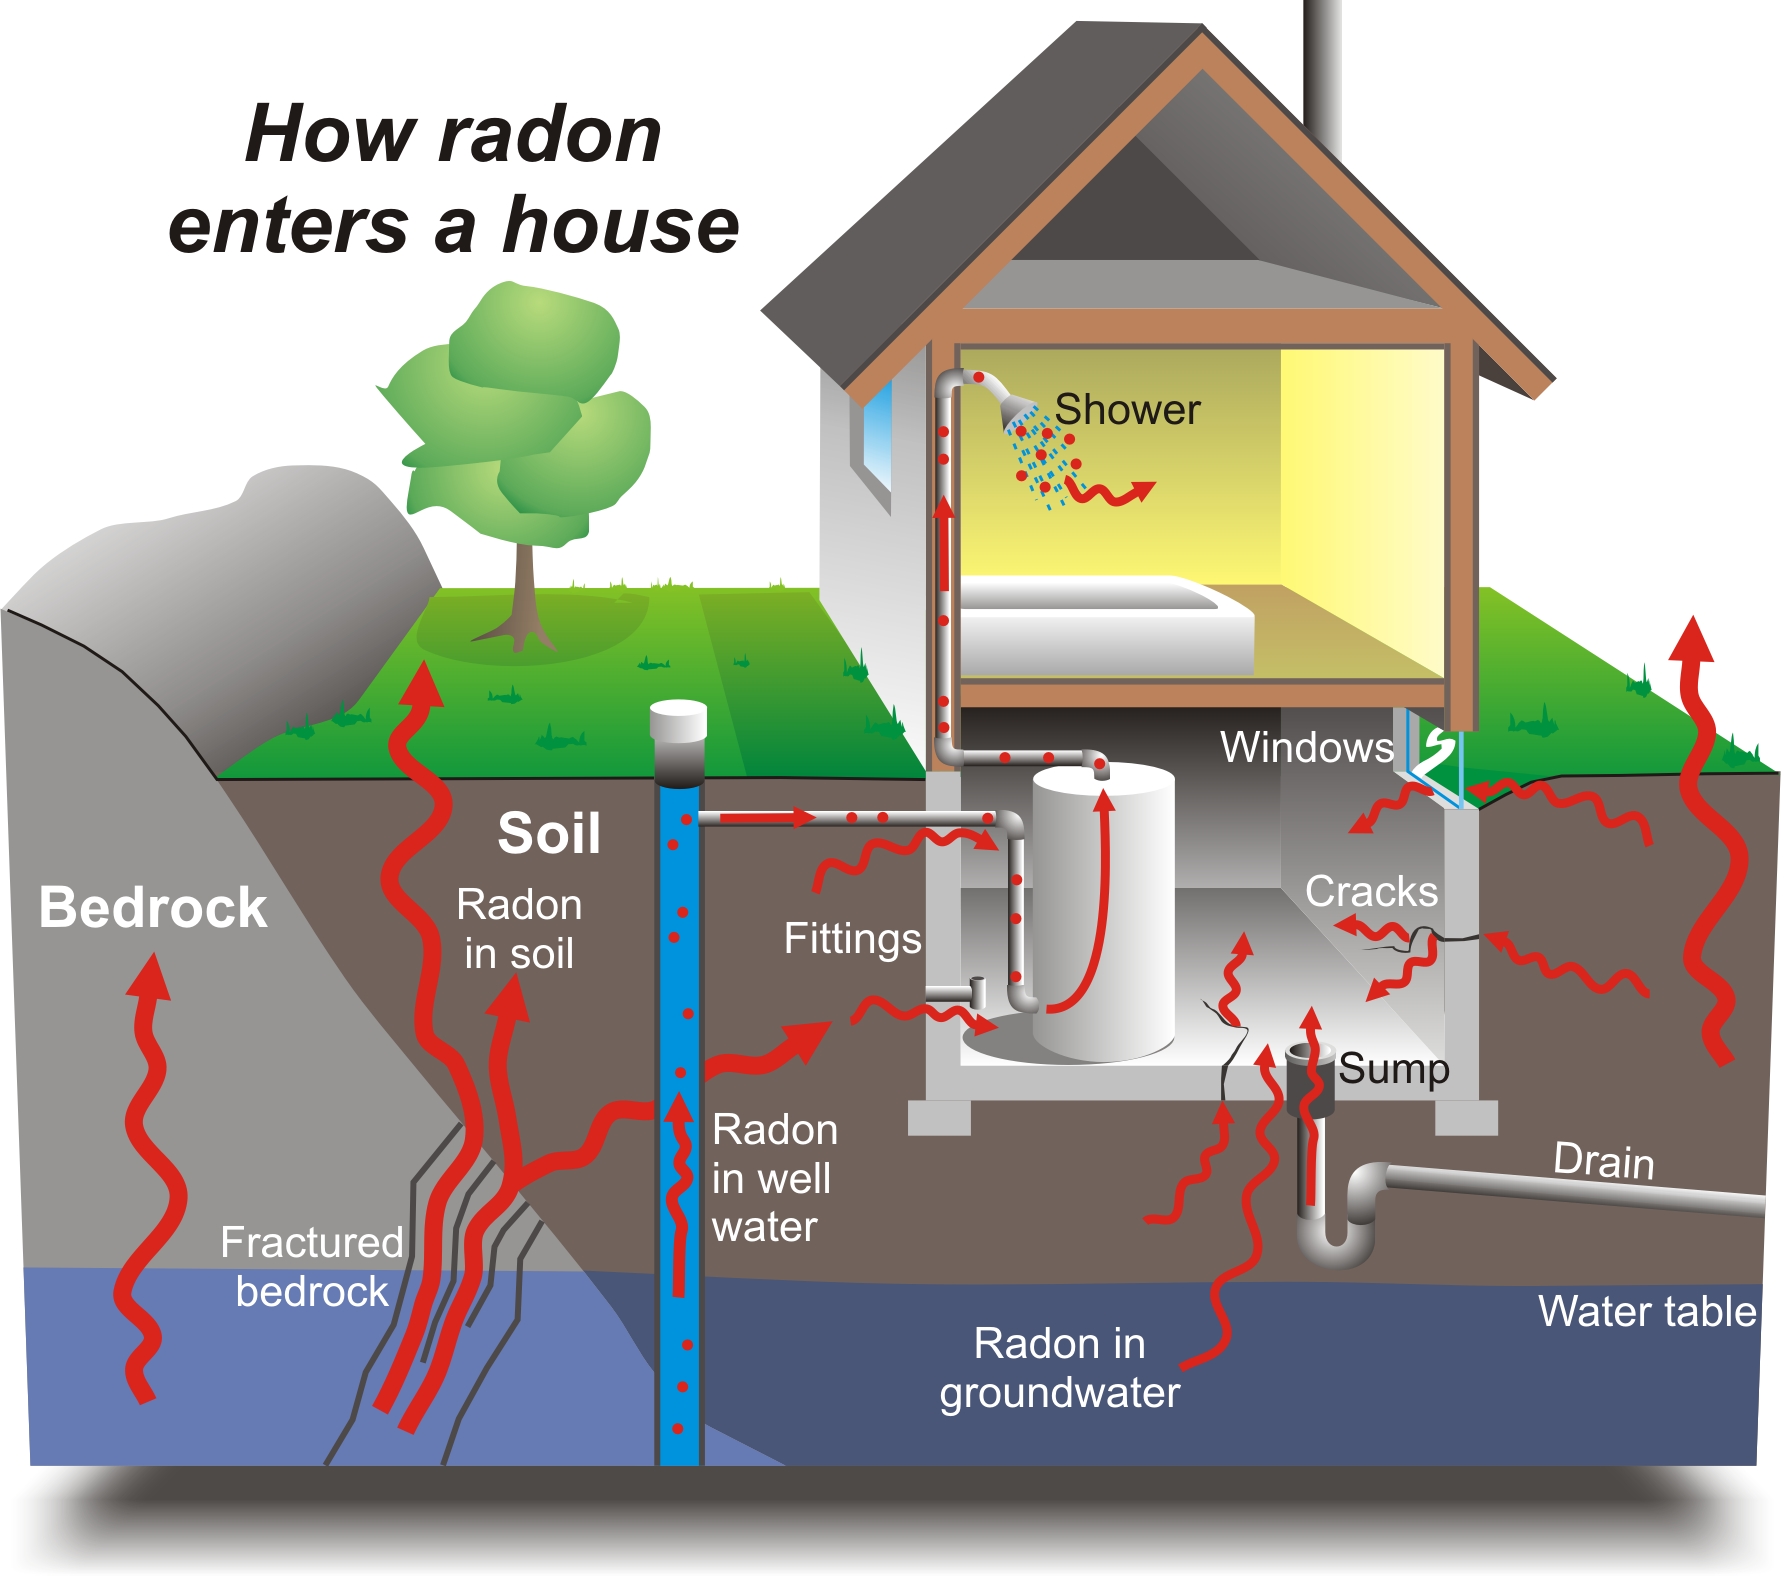 How radon enters a house Google image from http://chelsea.ca/sites/default/files/radon-maison_en.jpg